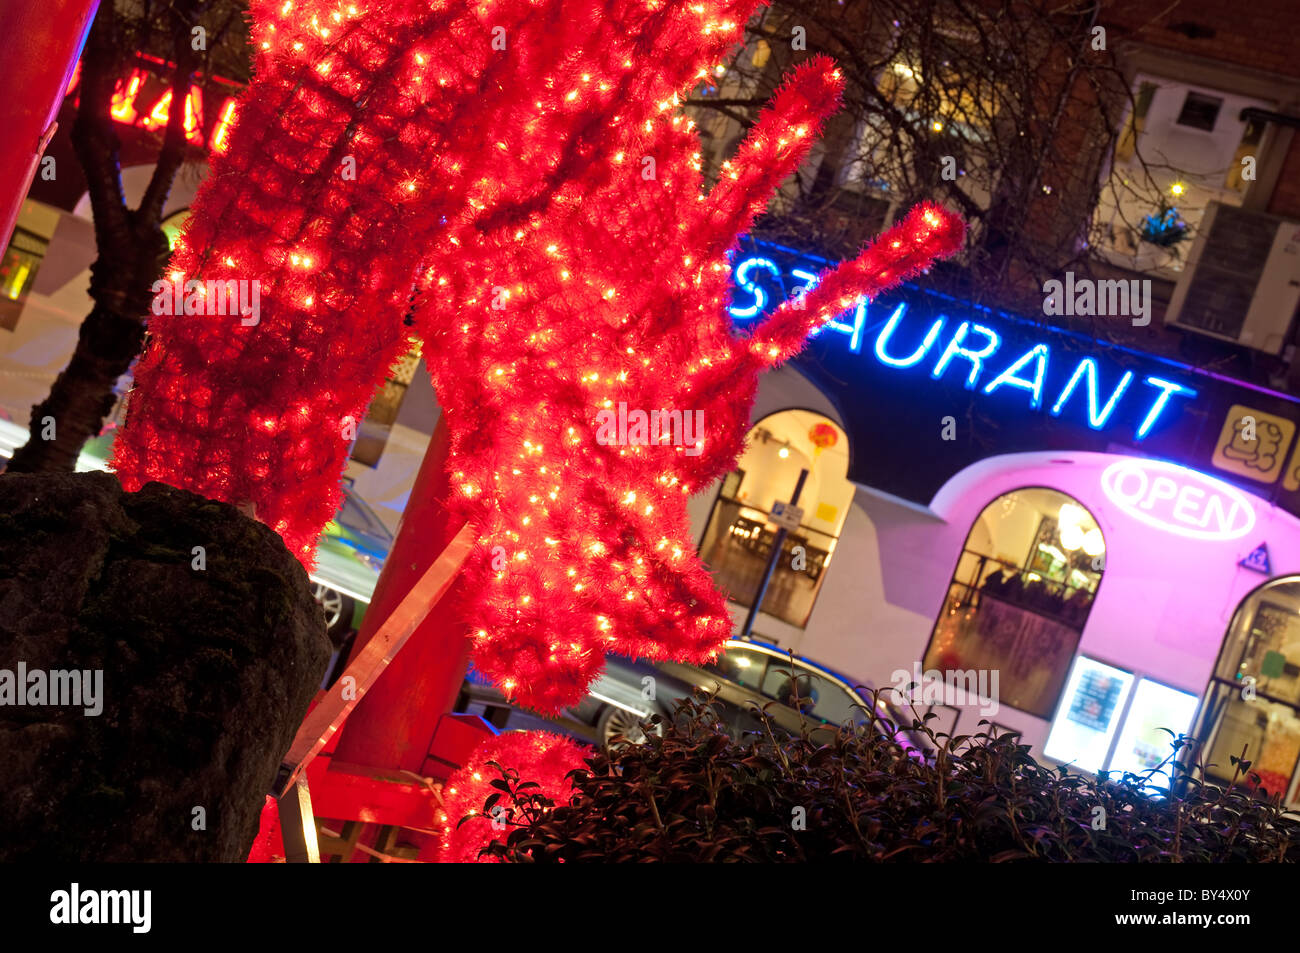 Illuminated red dragon,China Town,Manchester. Stock Photo